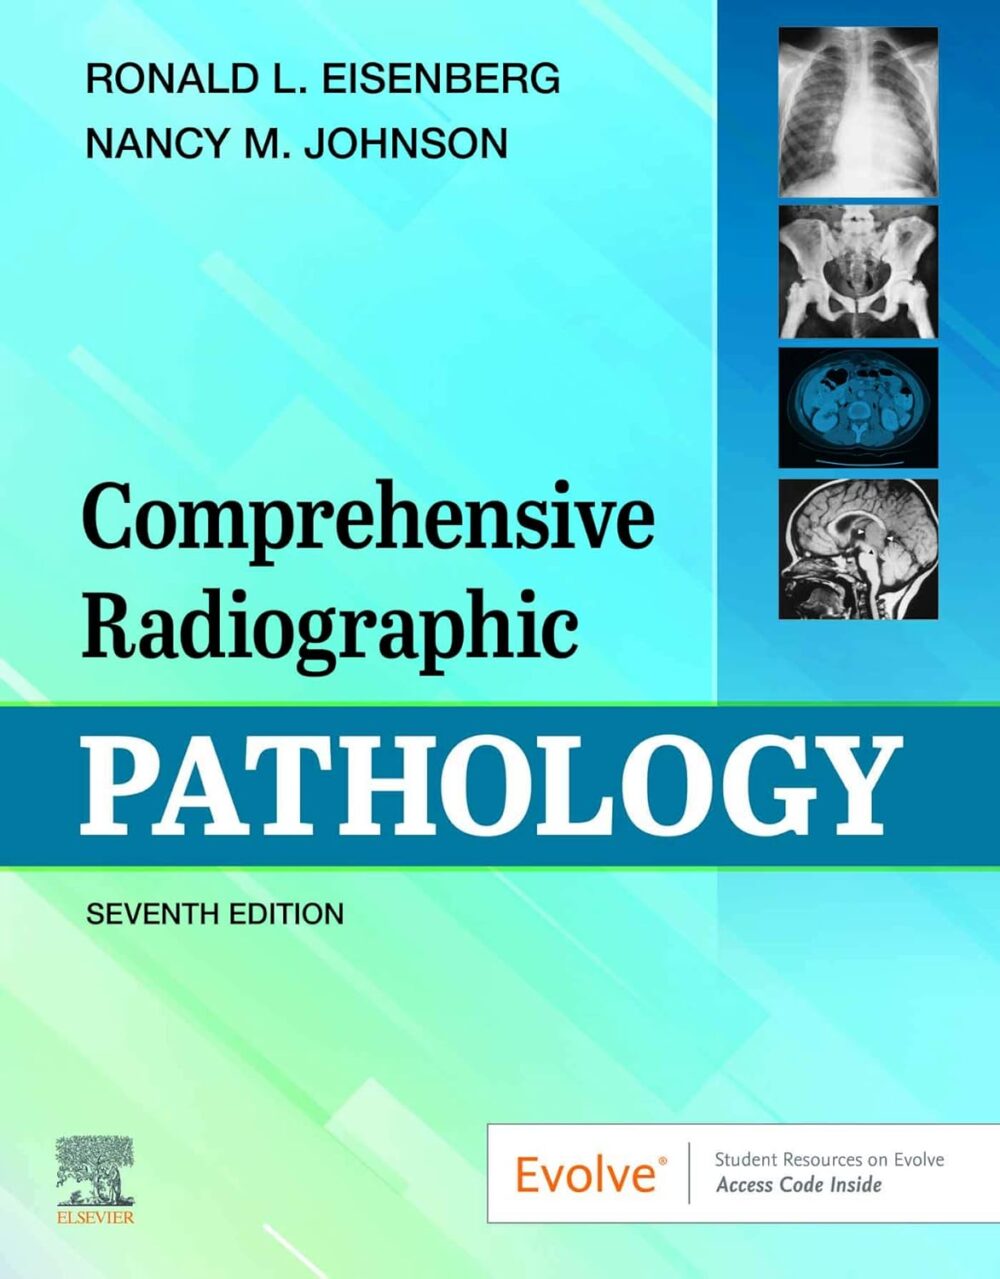 Comprehensive Radiographic Pathology 7th Edition